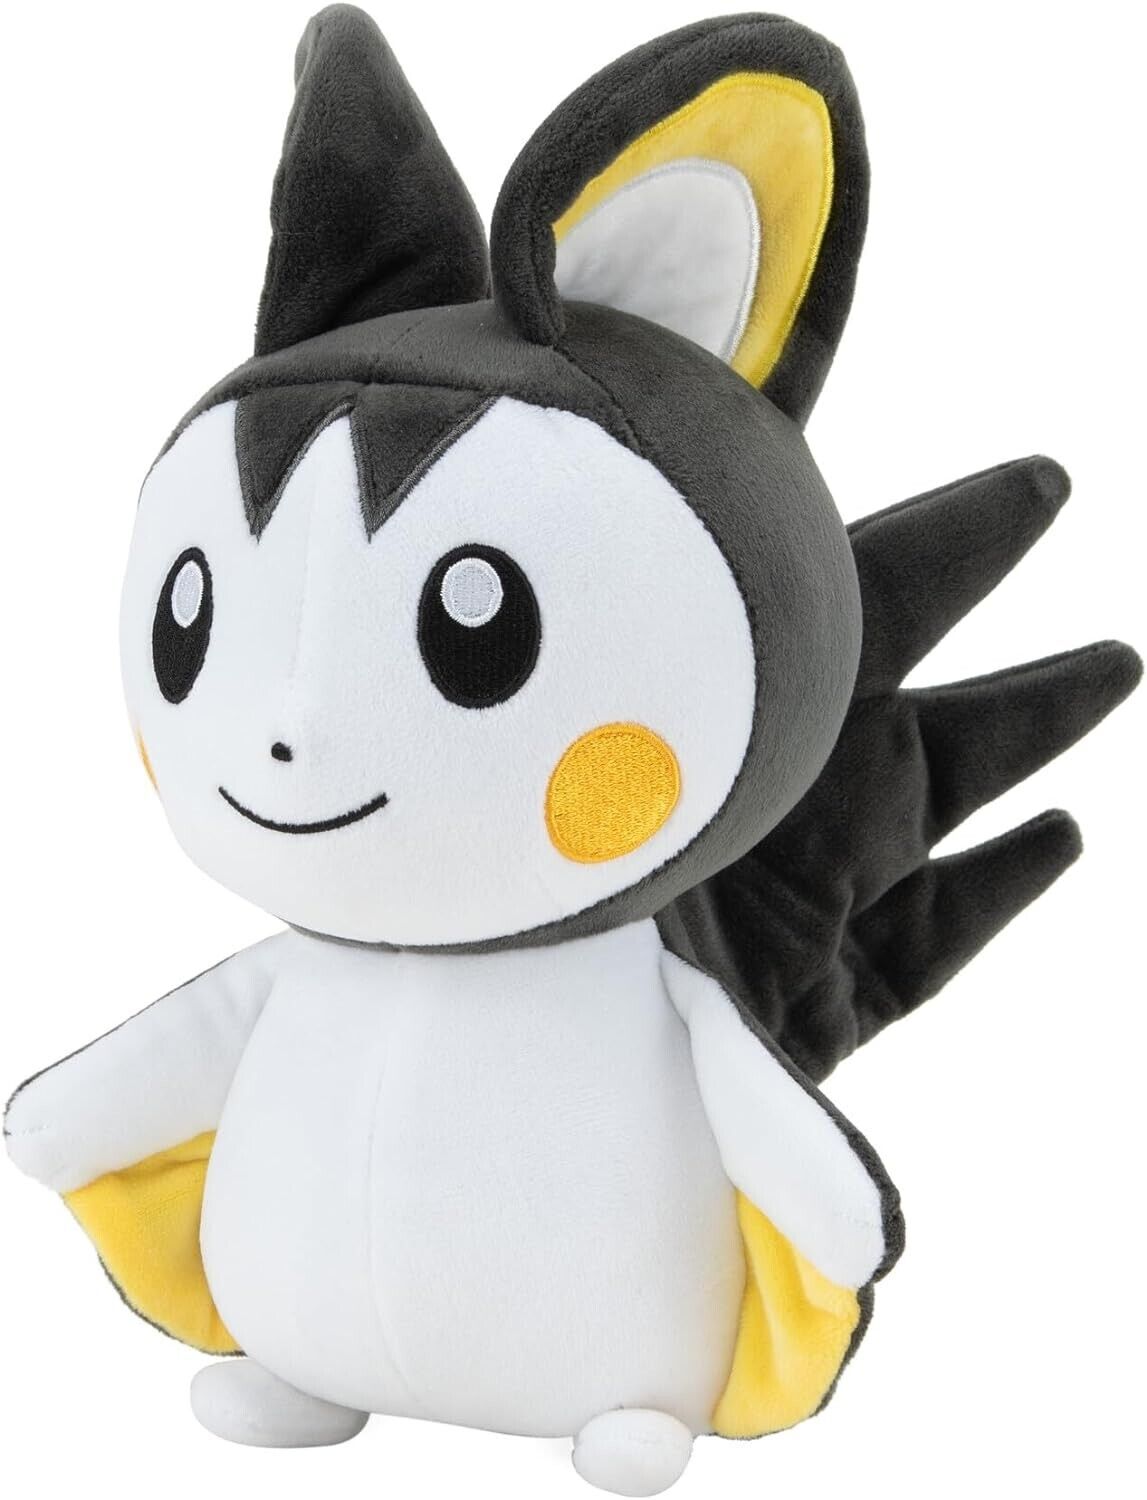 Pokémon Official & Premium Quality 8-inch Emolga Adorable, Ultra-Soft, Plush Toy